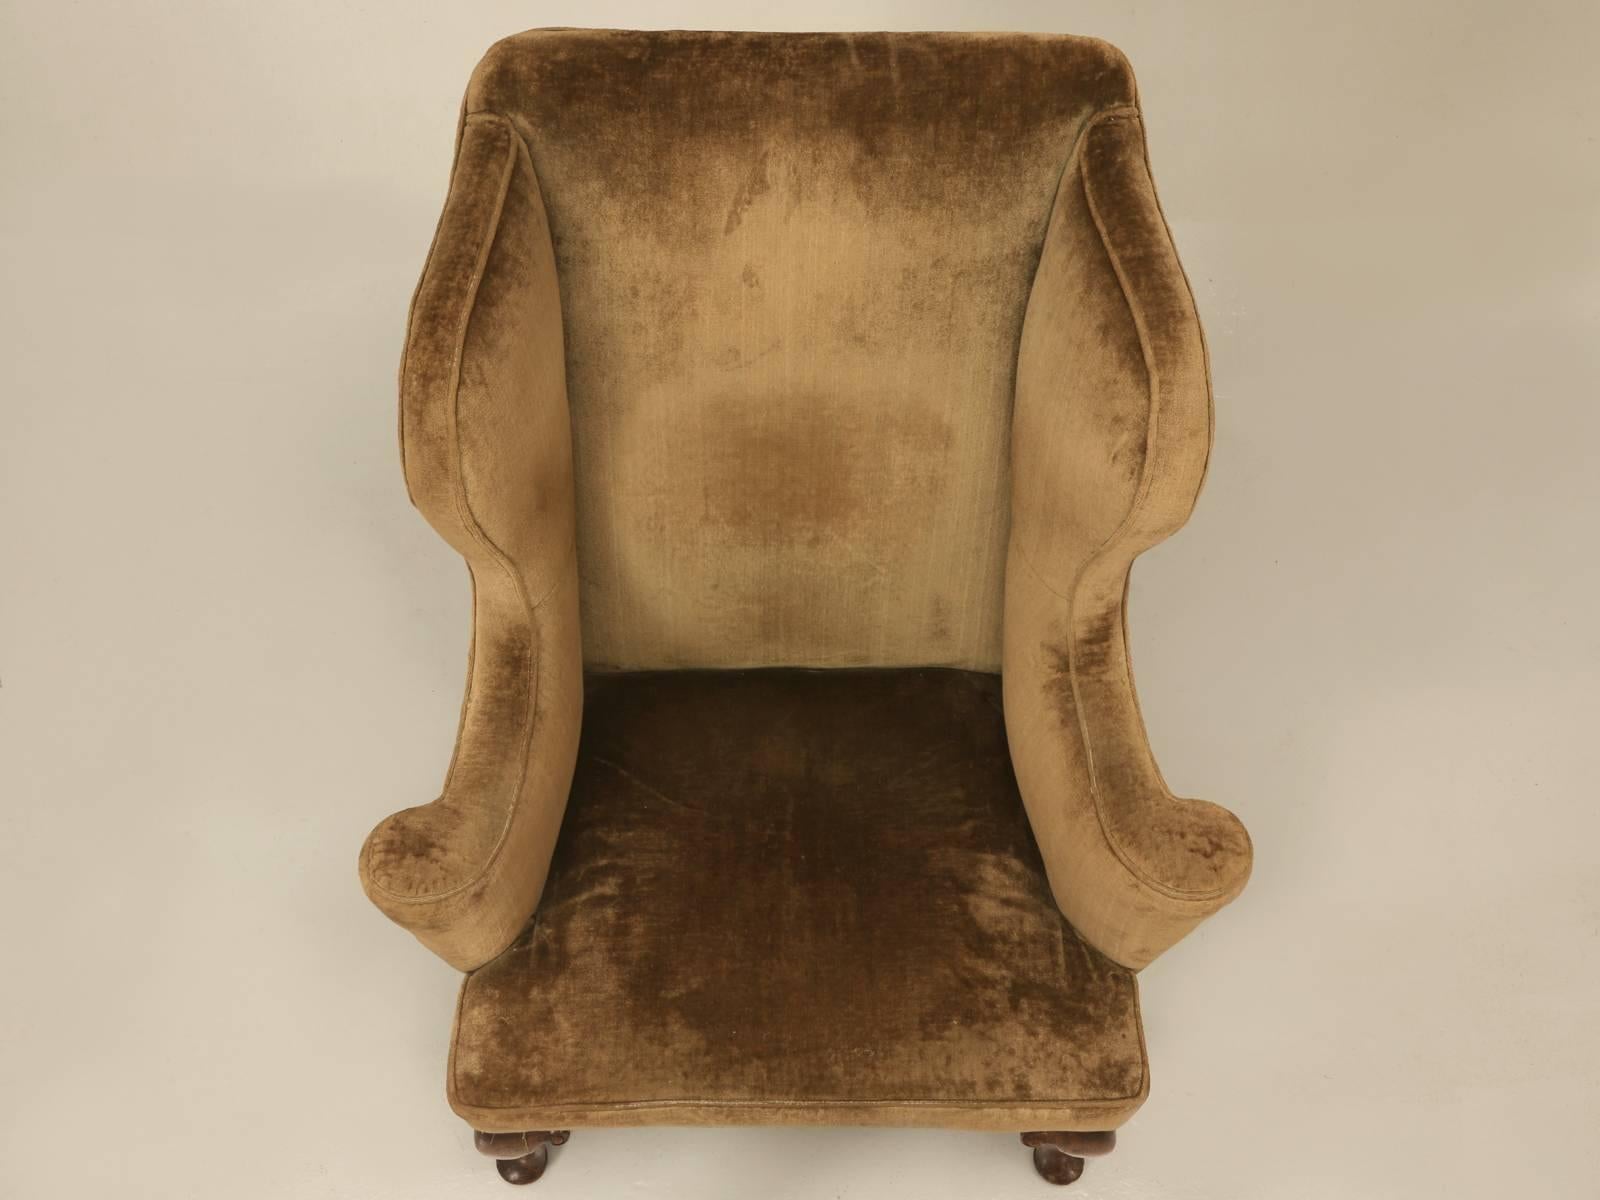 British George I Period Chair, circa 1720-1730